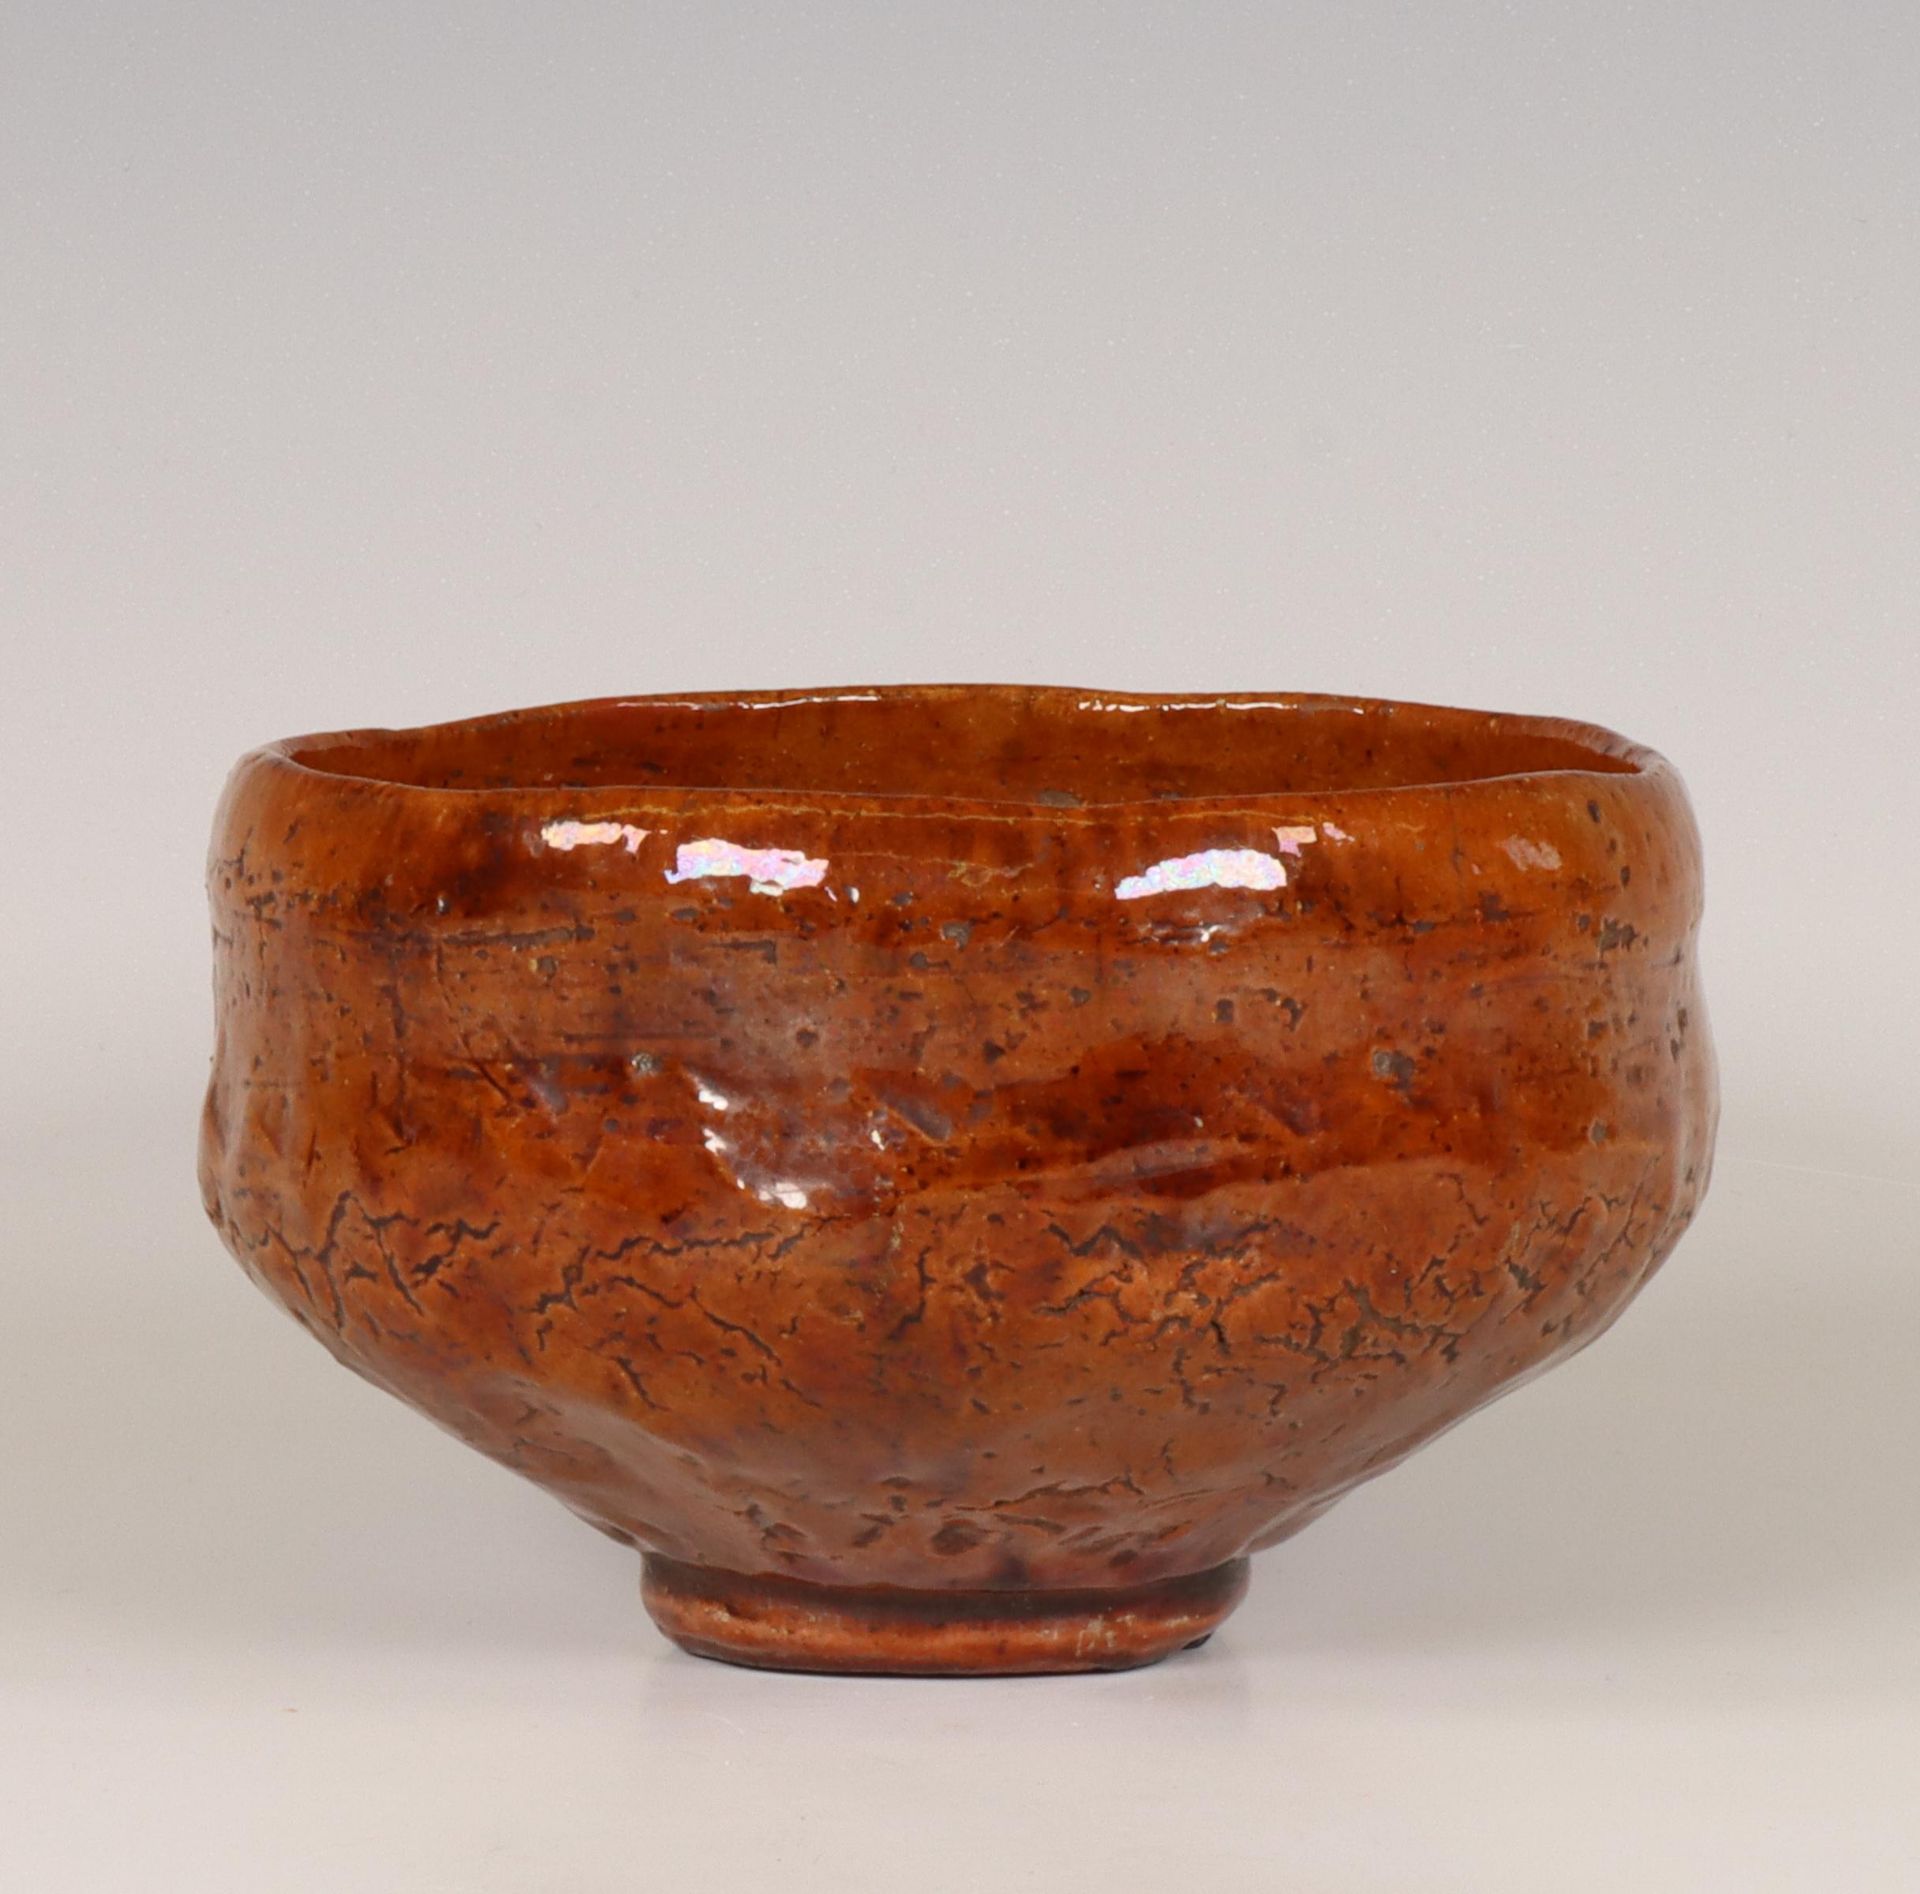 Japan, Ohi ceramic chawan, 20th century,